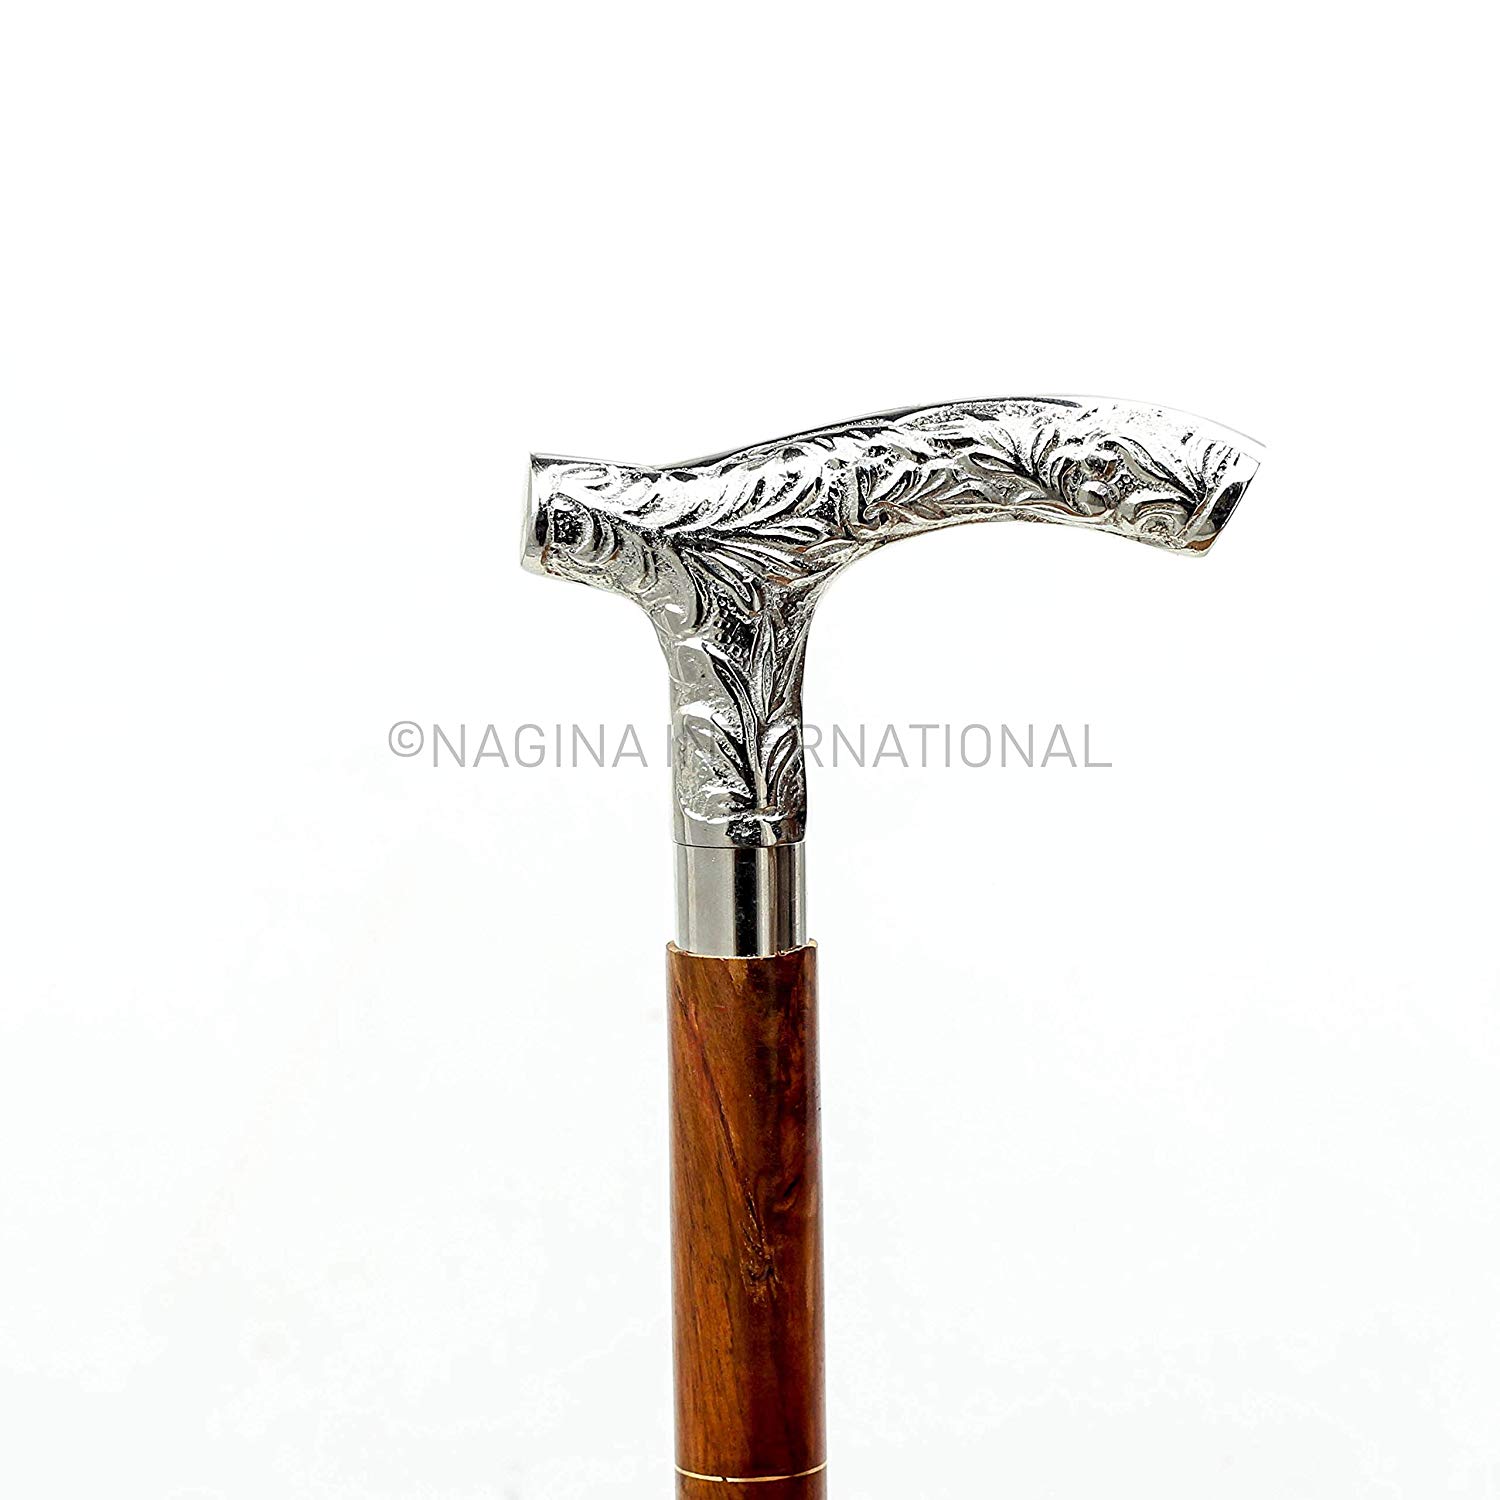 Jaguar shape brass handle & solid wood walking stick ( 36 inch height )